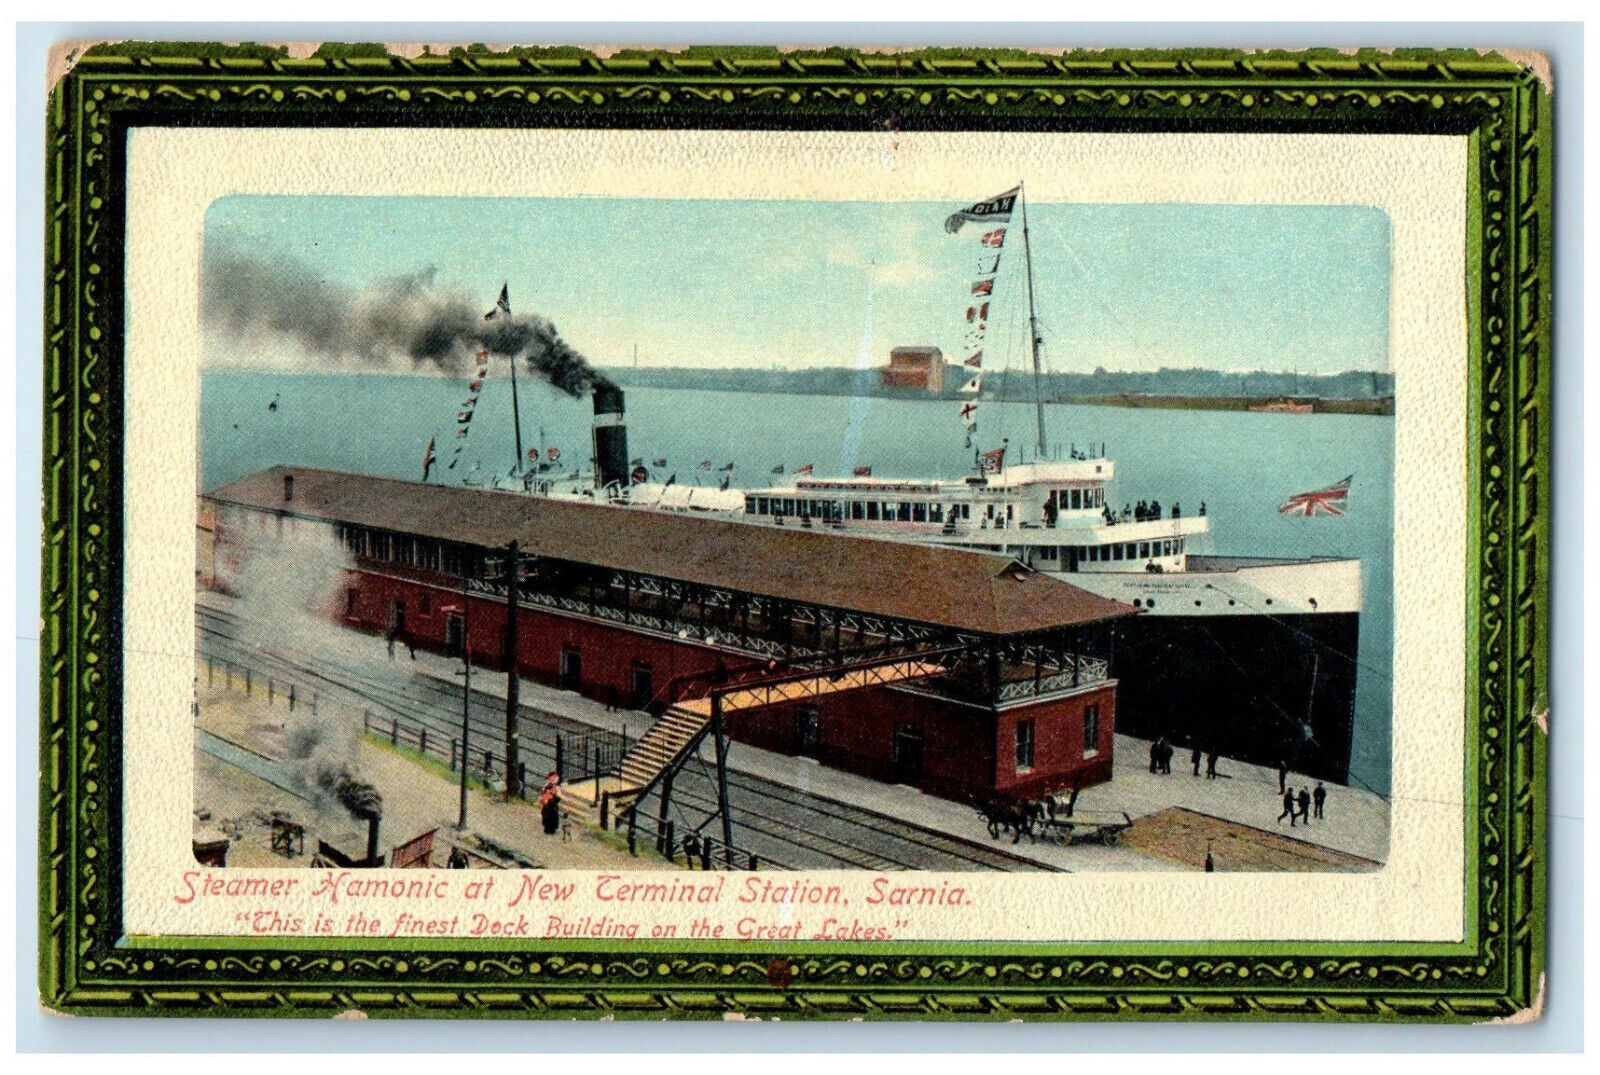 c1910 Steamer Hamonic at New Terminal Station Sarnia Ontario Canada Postcard